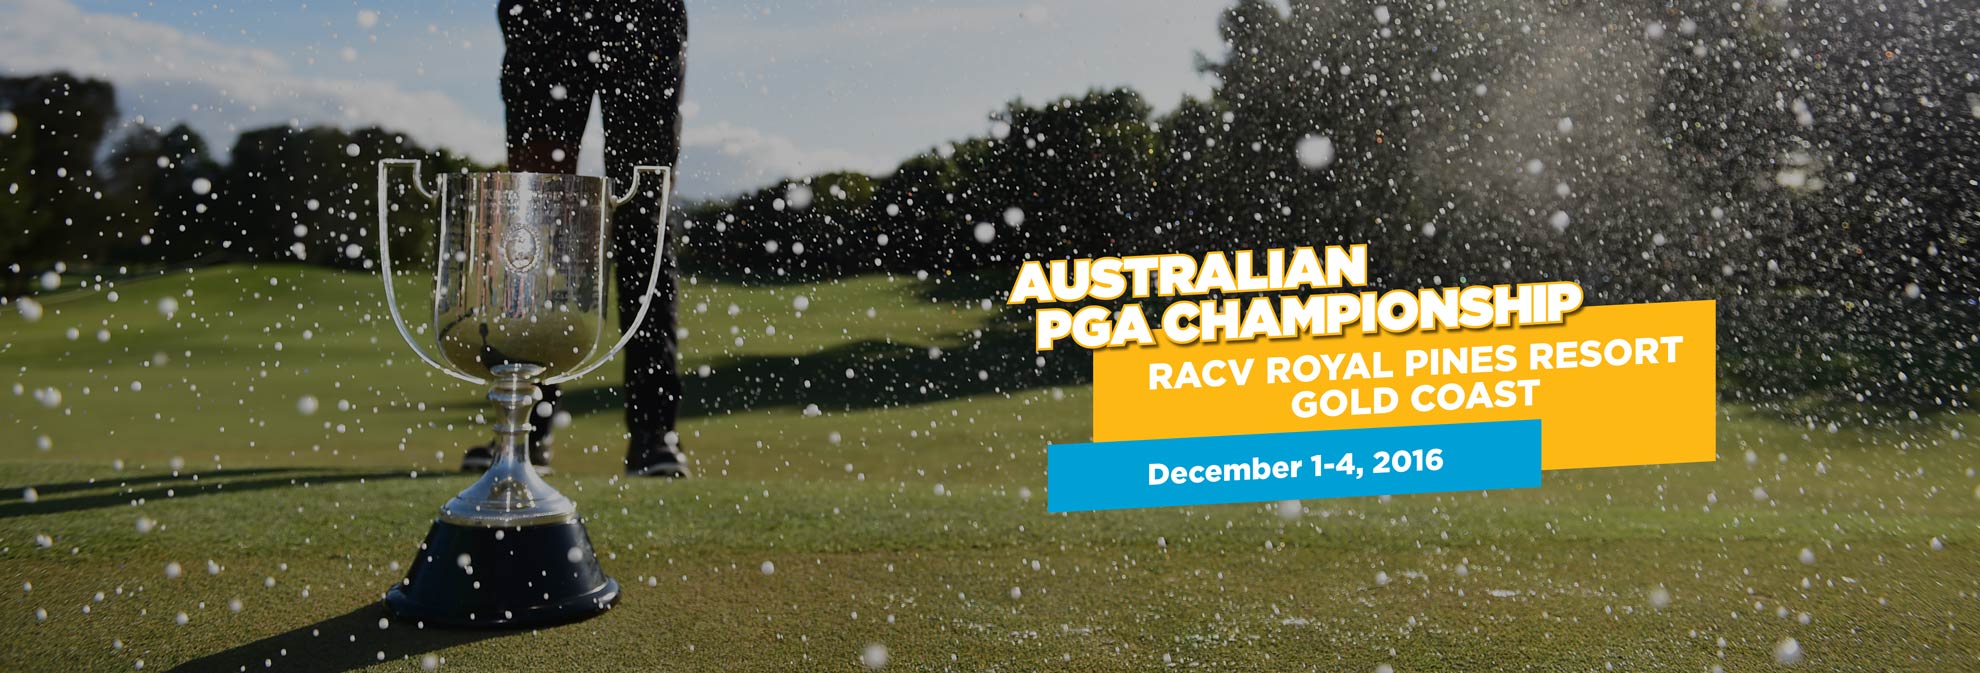 Australian PGA Championship 2017